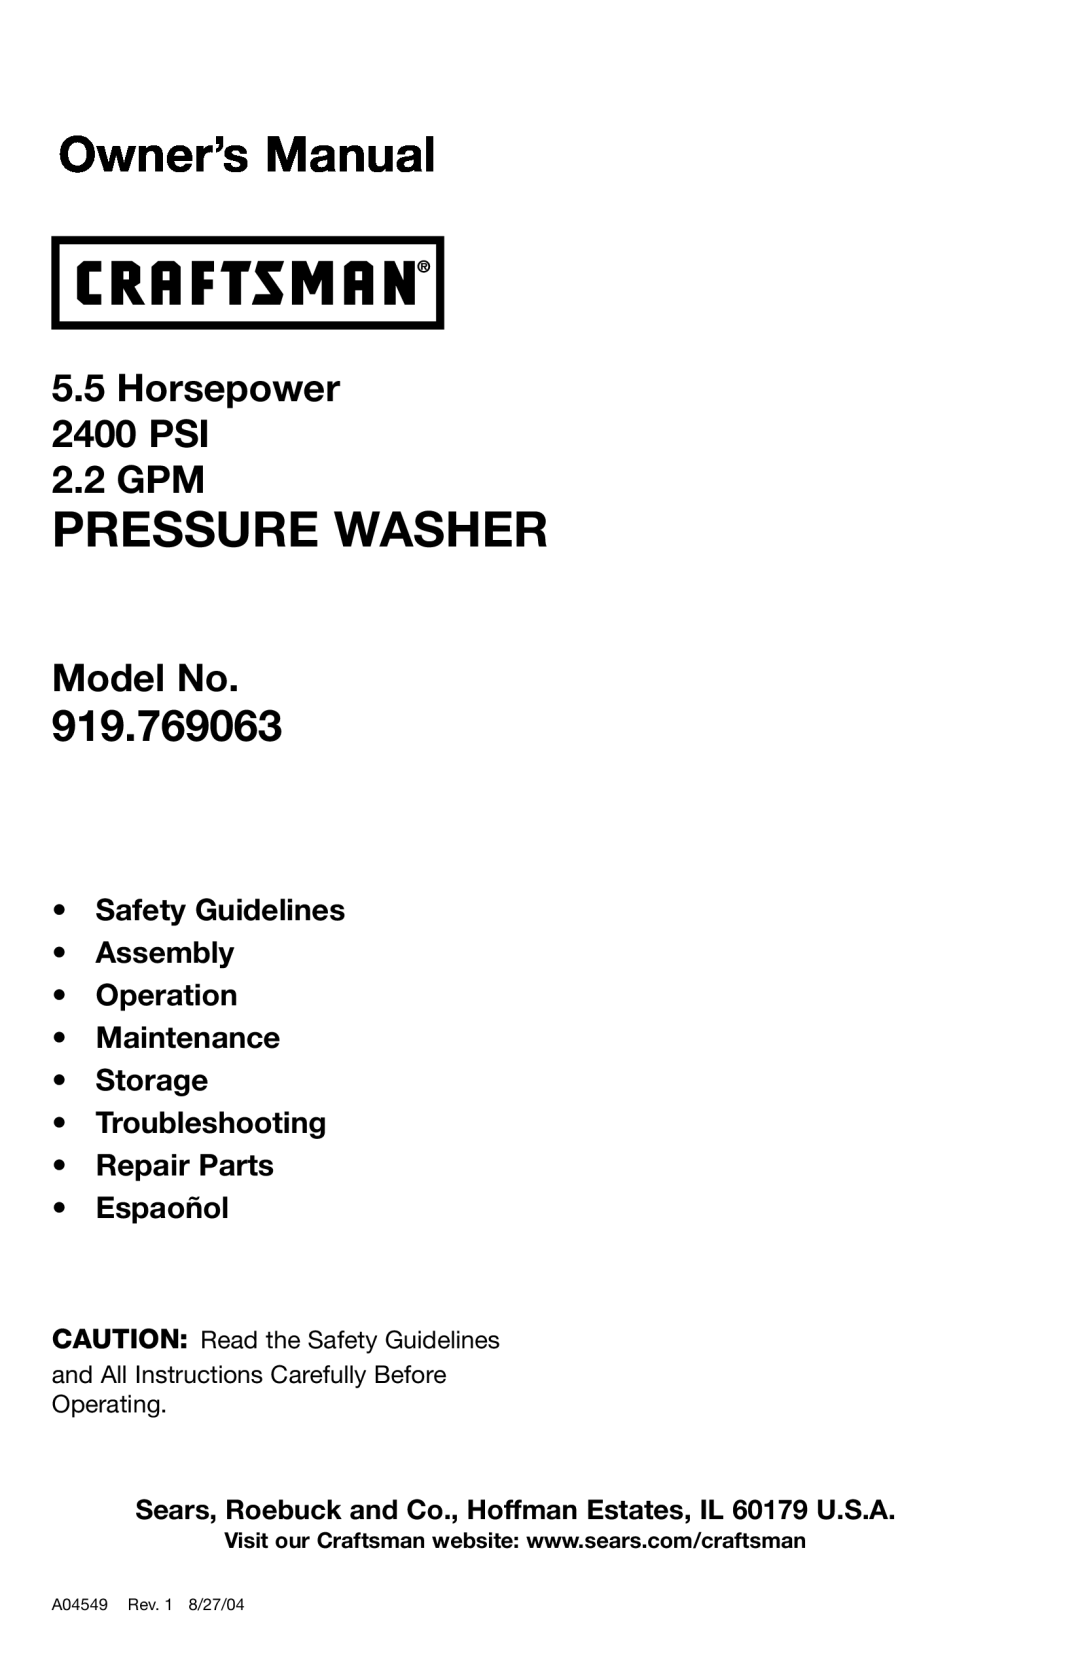 Craftsman 919.769063 owner manual Safety Guidelines Assembly Operation Maintenance Storage, Pressure Washer, Model No 